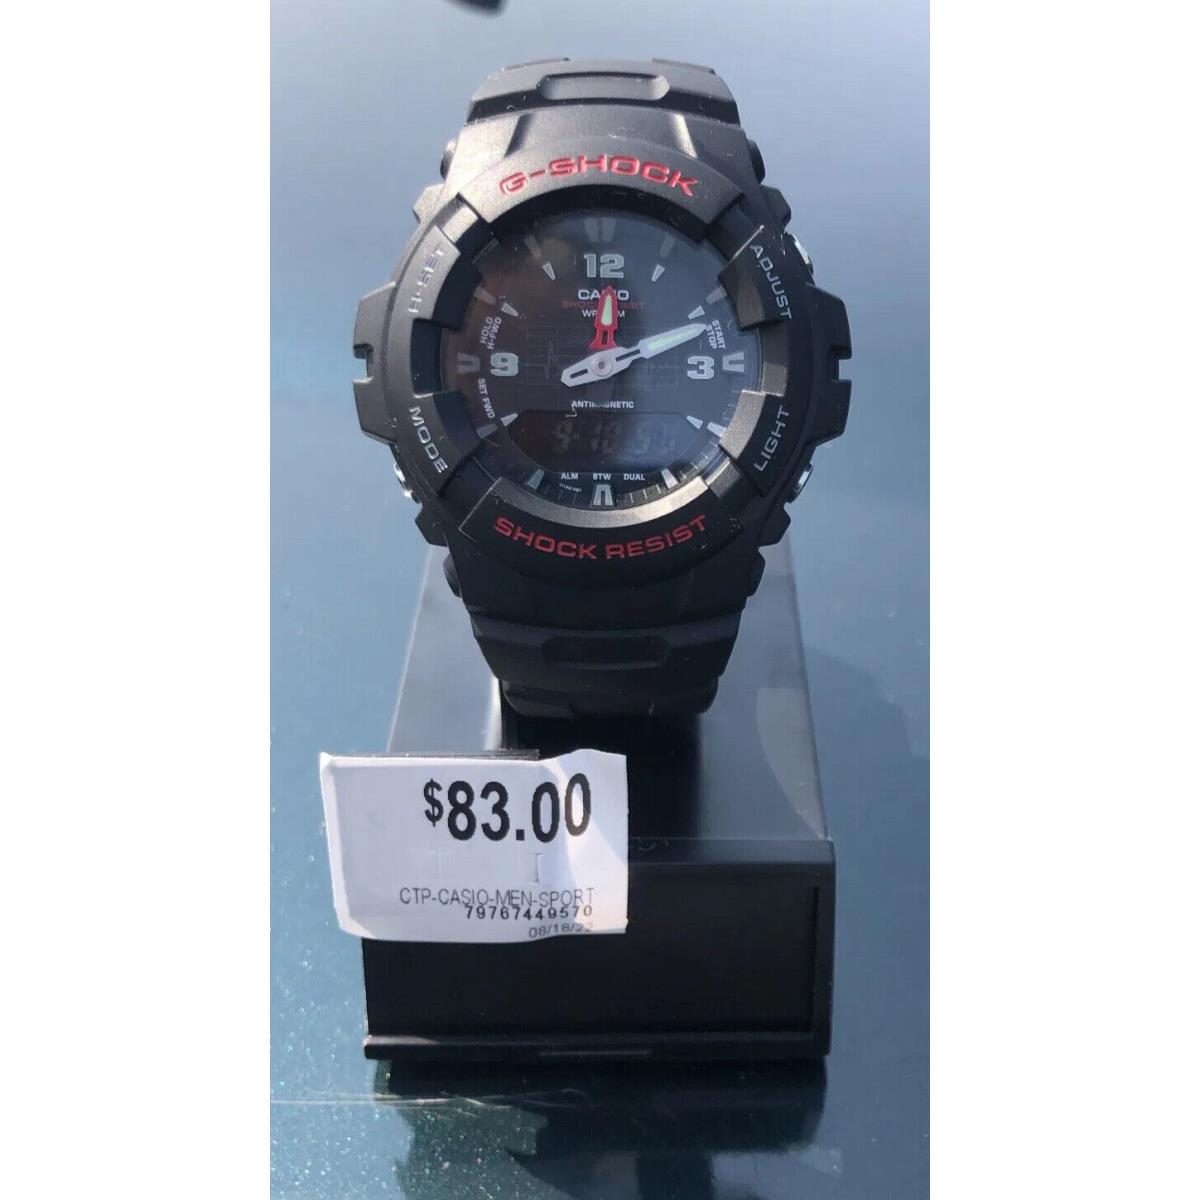 Casio G100-1BV G-shock Watch Digital/analog Black Resin Band Alarm